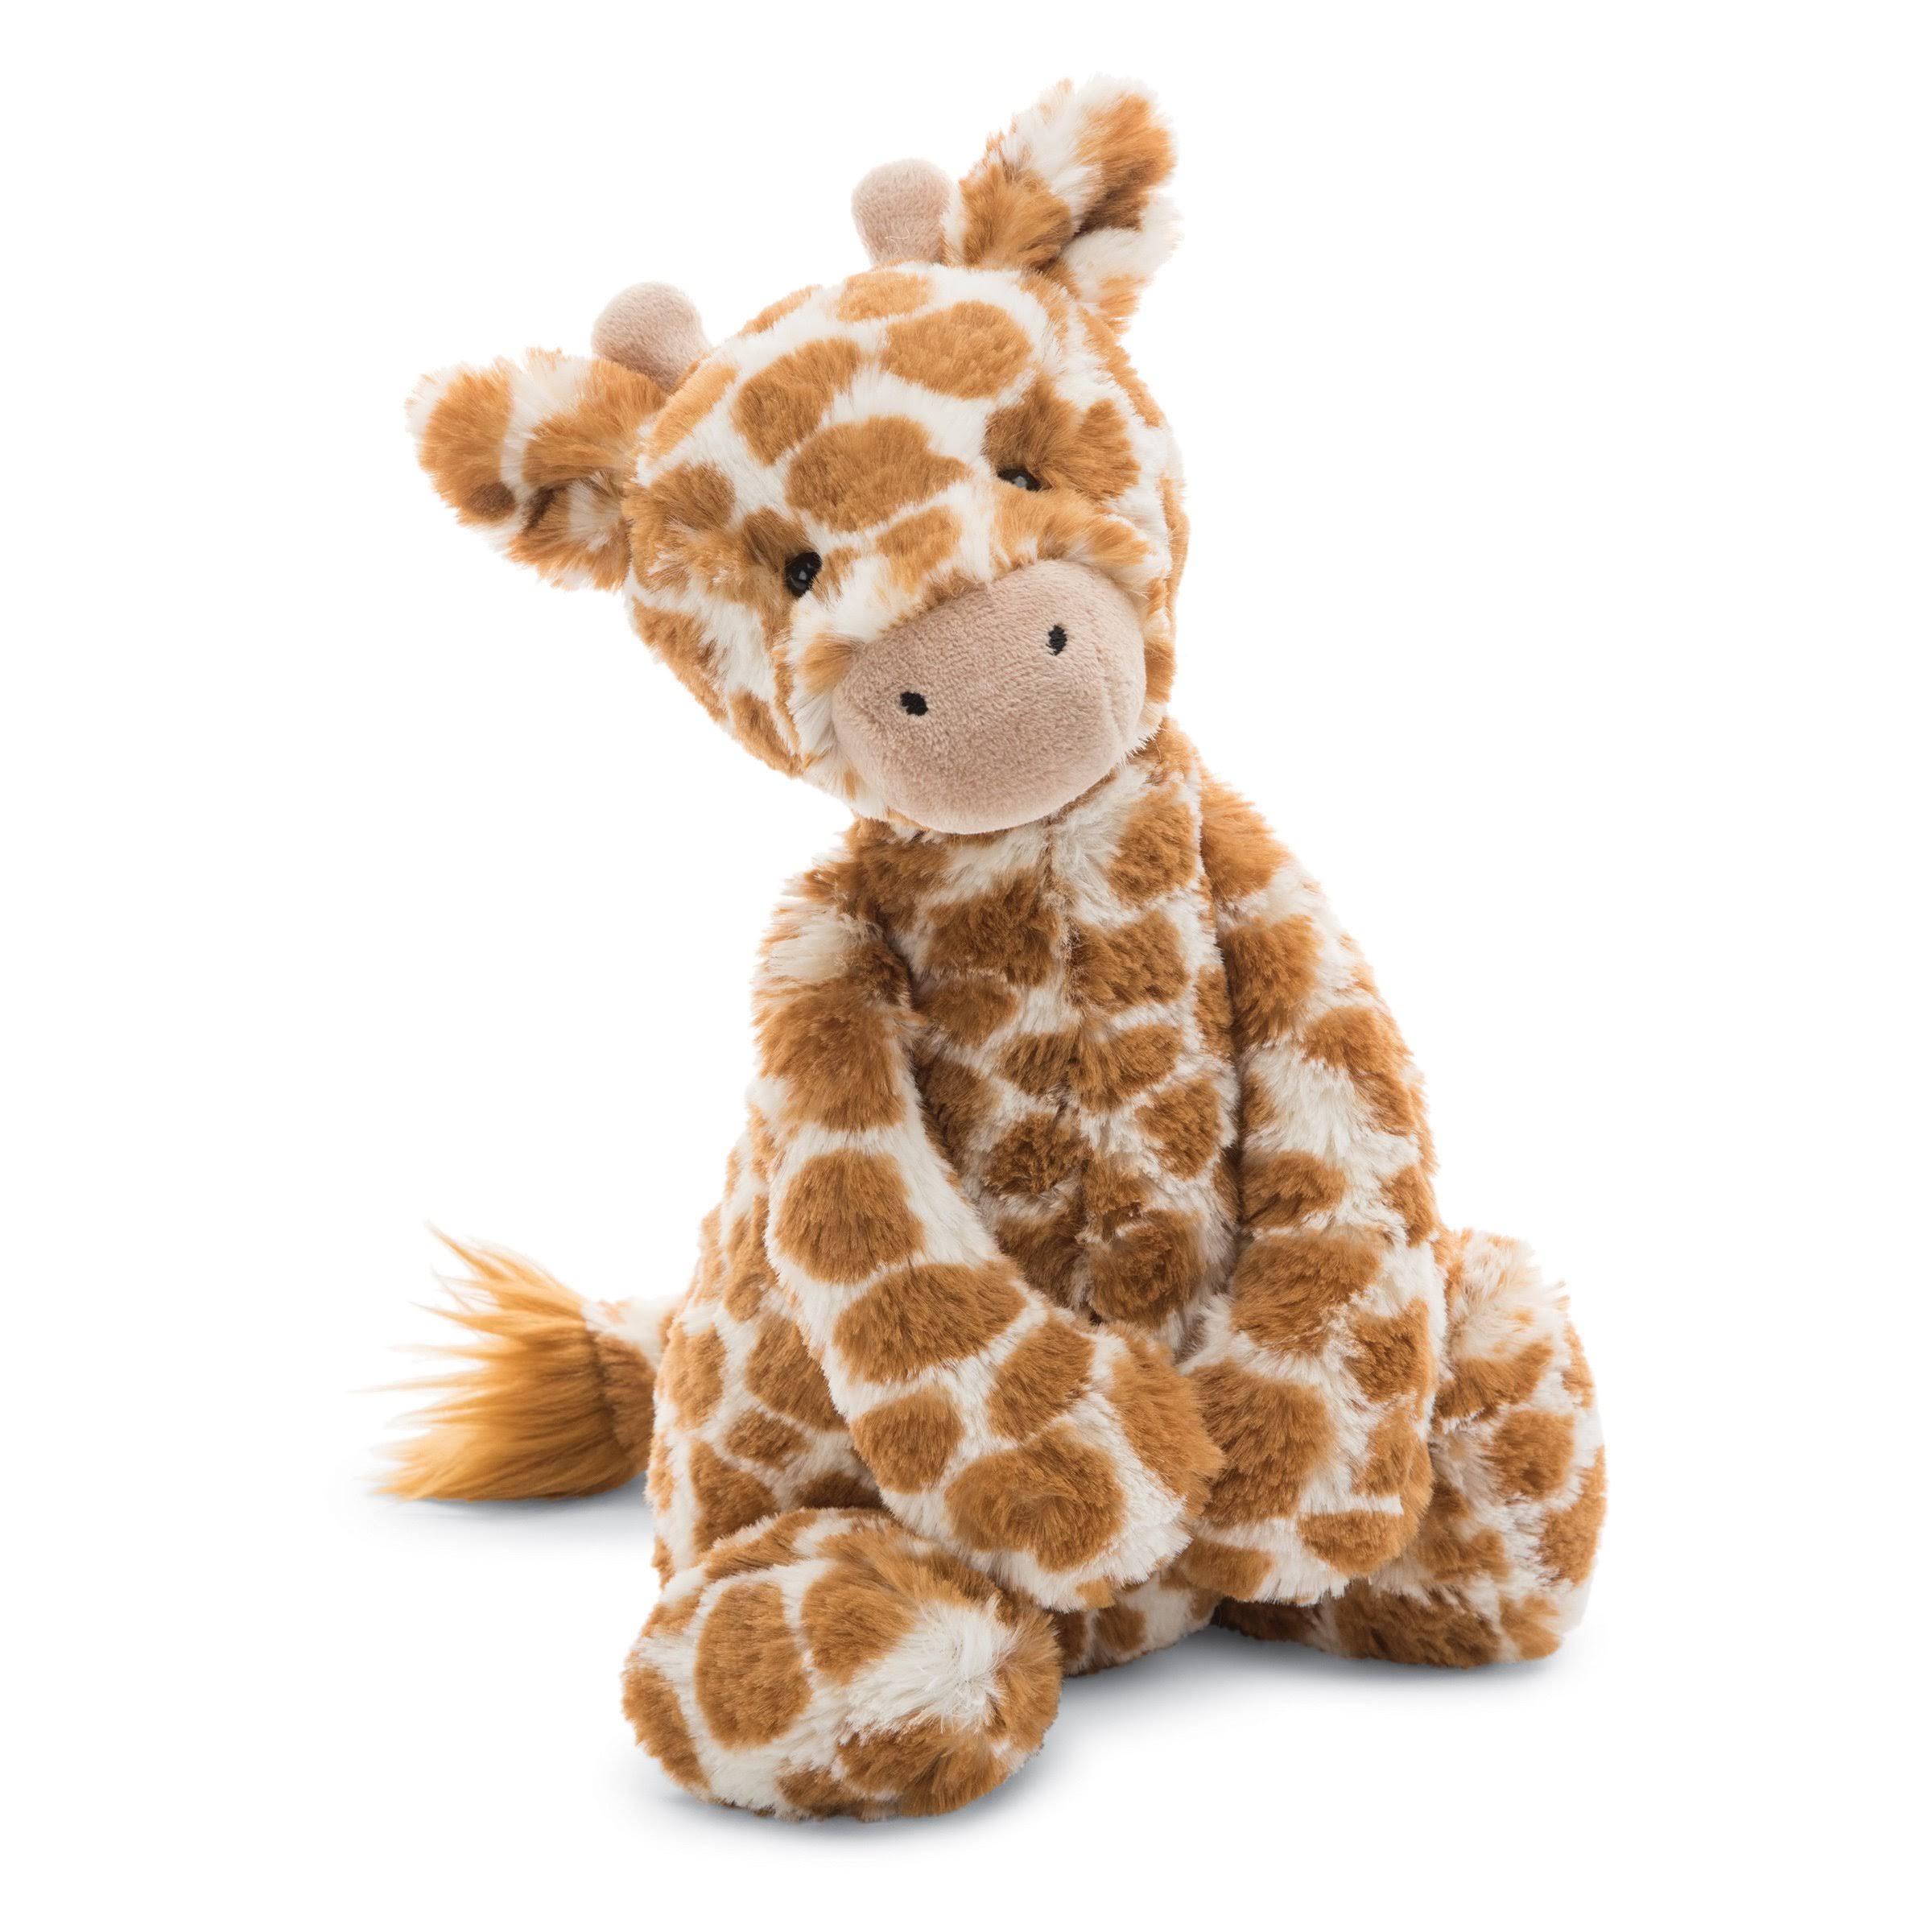 Jellycat Bashful Giraffe Plush Toy - Medium, 31cm